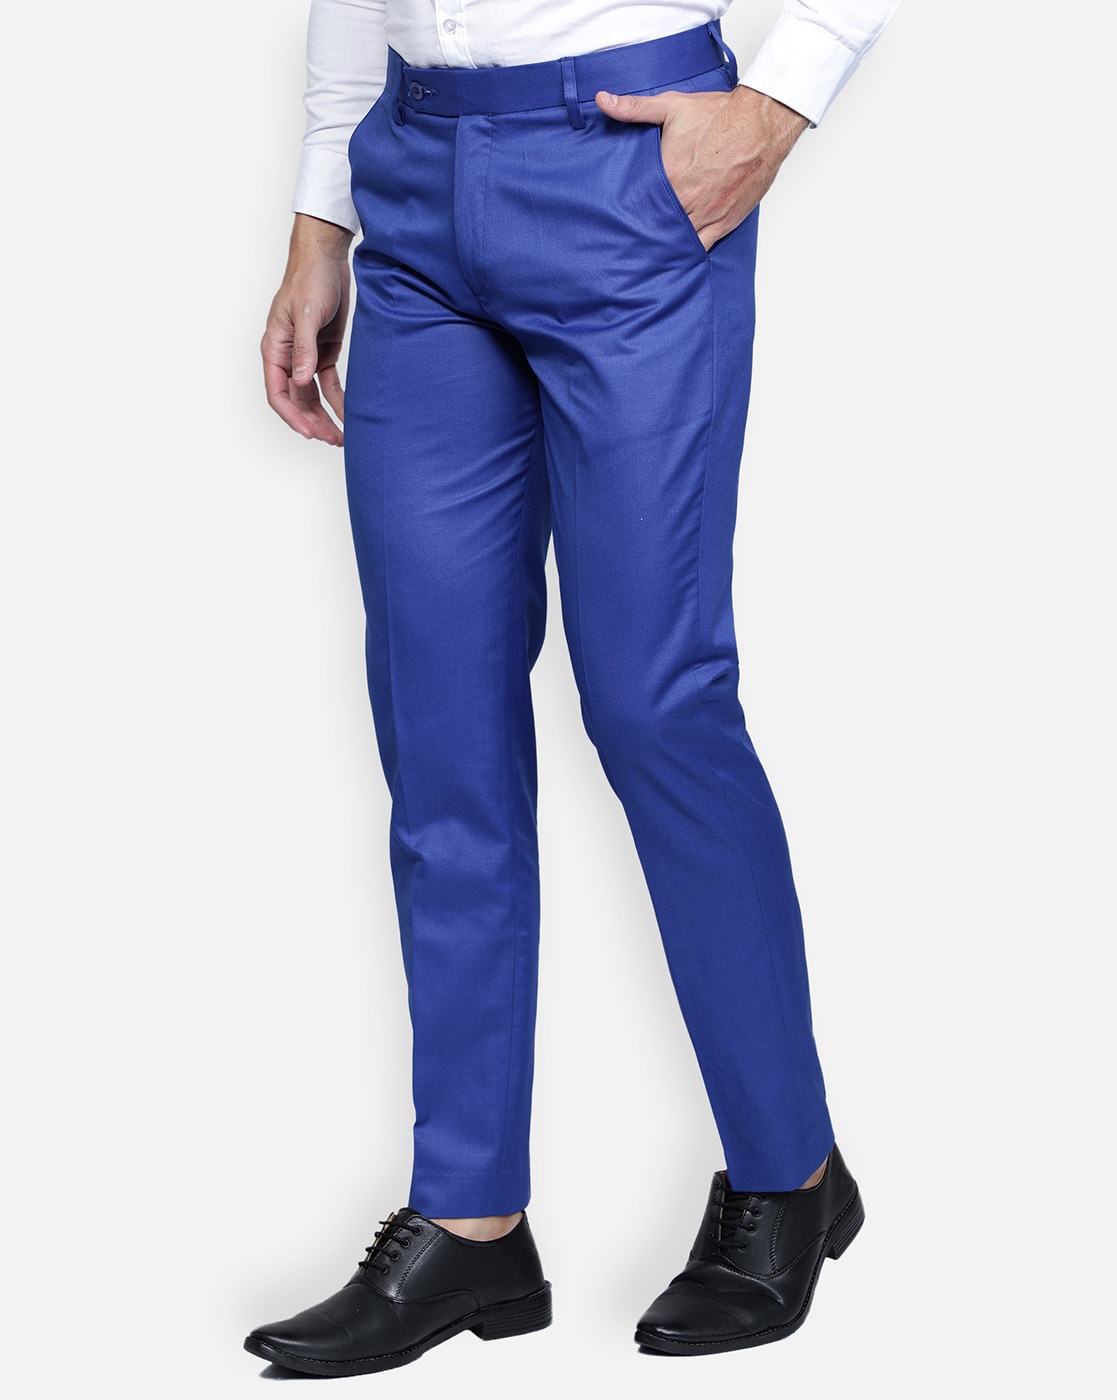 Royal Blue Women Suit Pants 2-Piece Set Formal Business Party Ladies Office  Wear | eBay